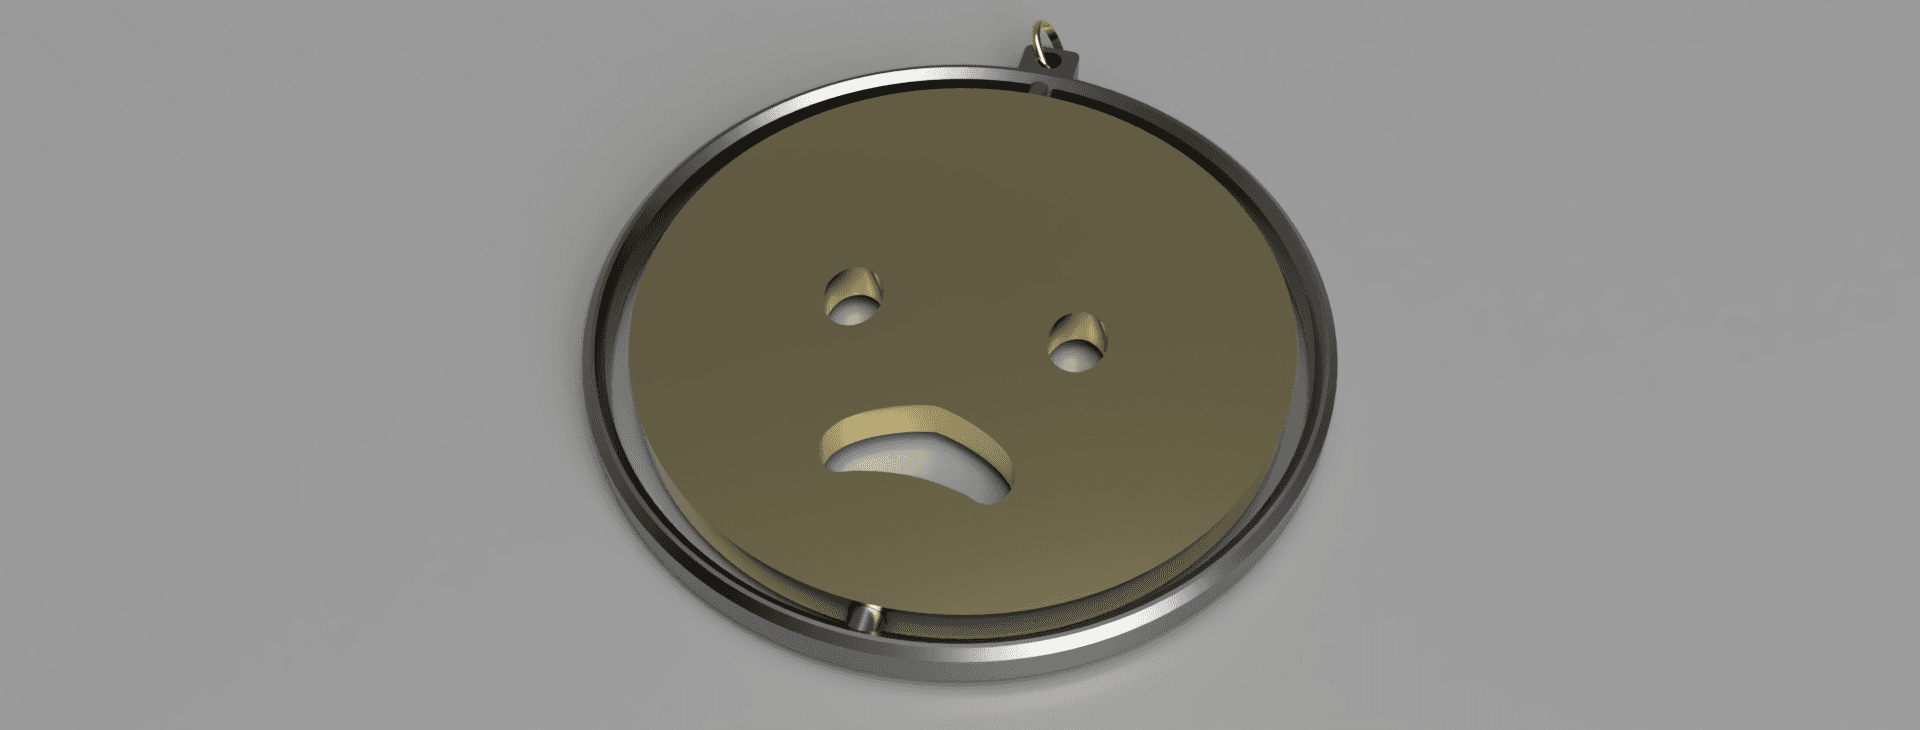 Spinning key ring! Worried Face Emoji 3d model